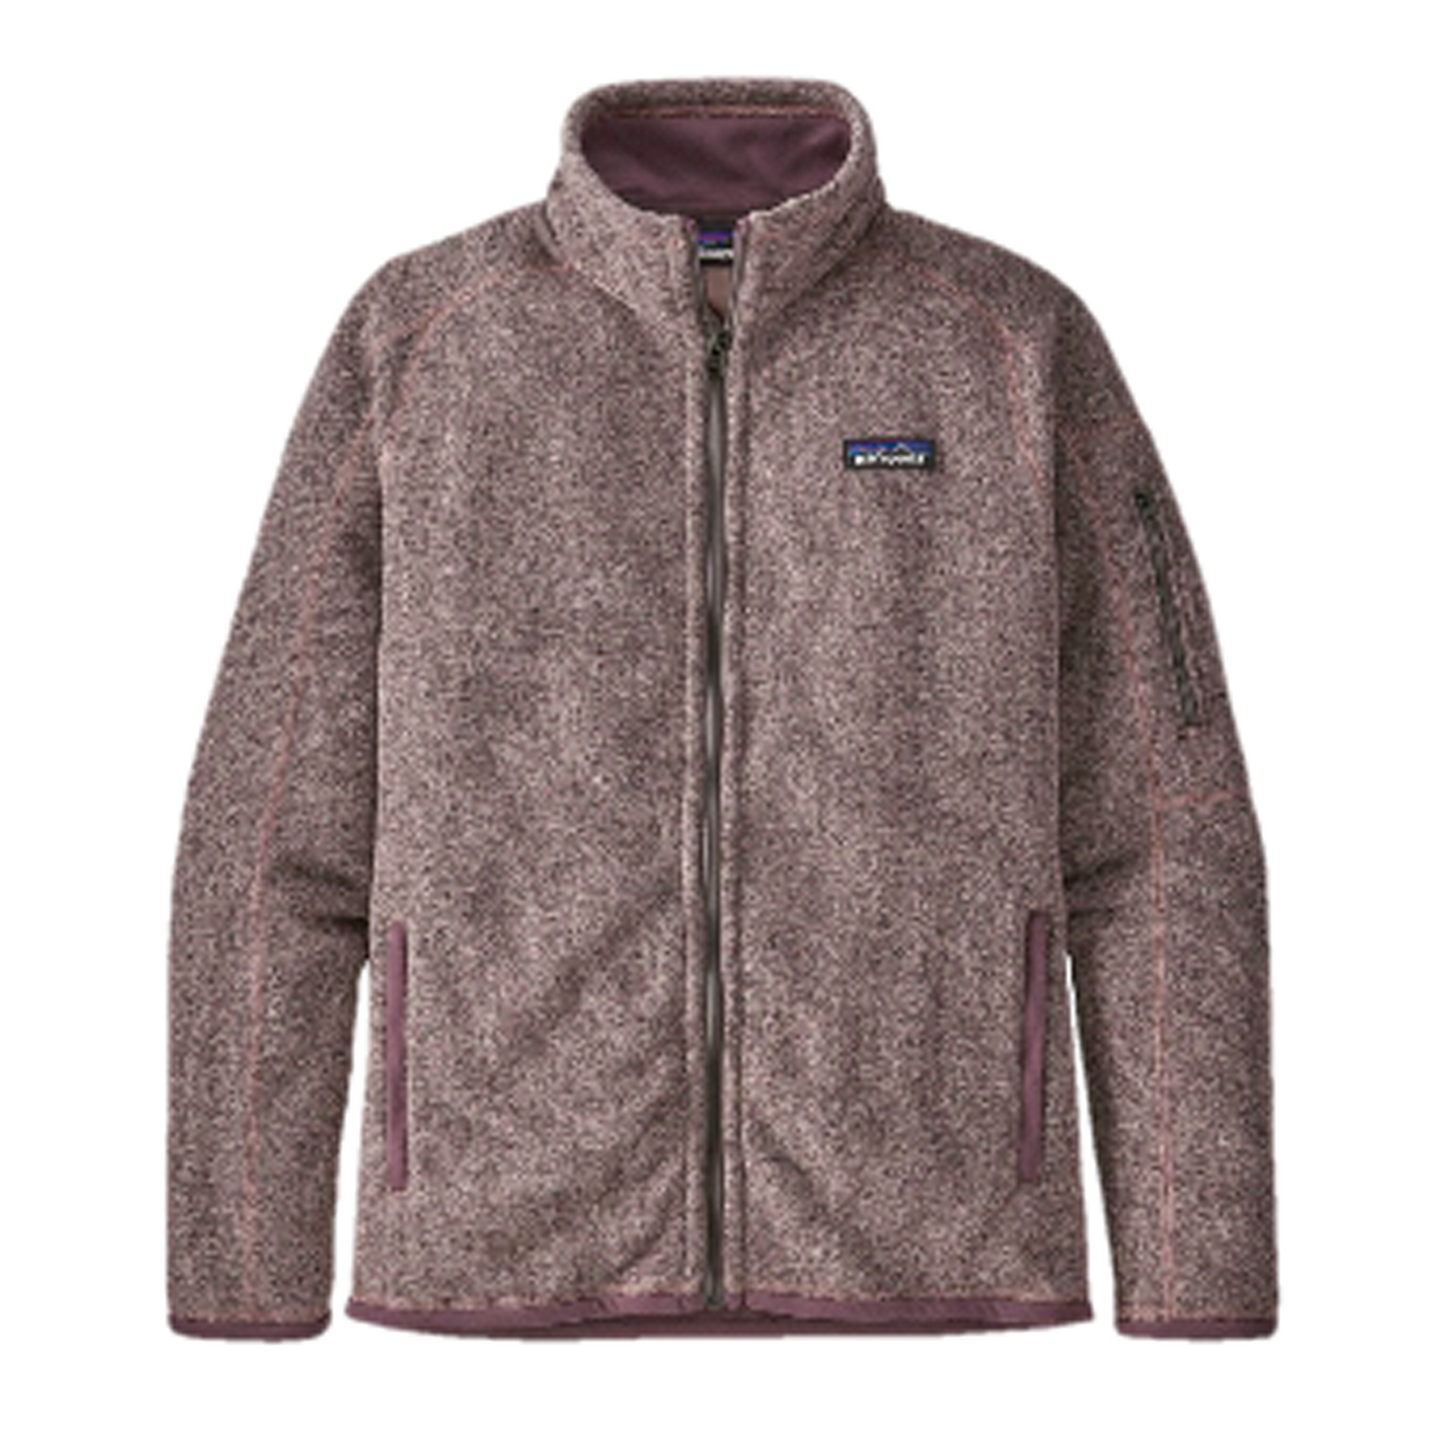 Patagonia Women's full zip fleece better sweater in the colour hazy purple.